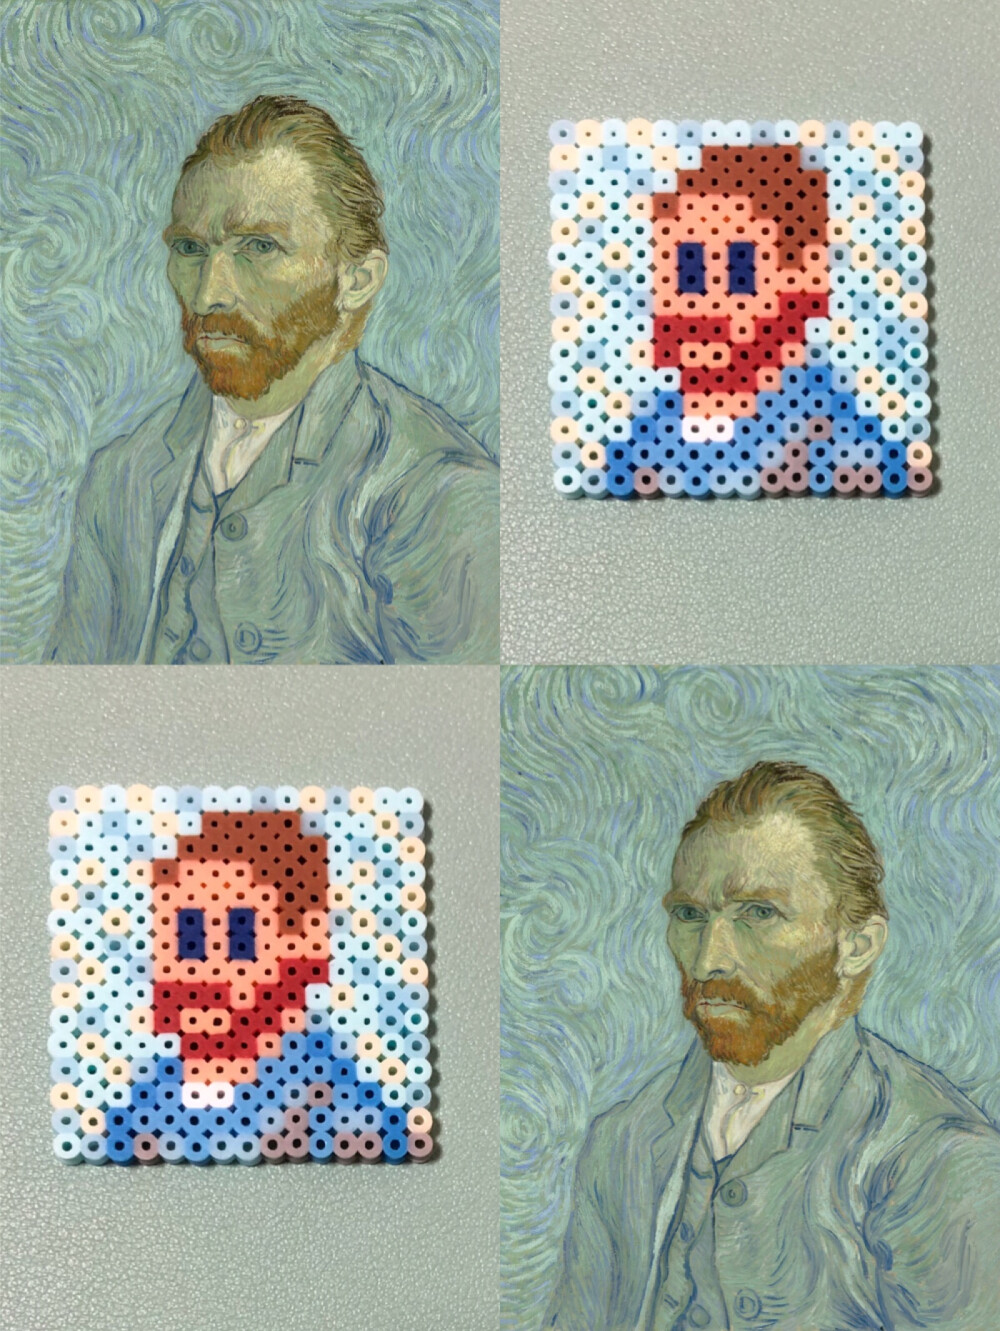 2019/02/26
Vincent van Gogh Self-Portrait，September 1889梵高一生中有很多画像 这张是他1889年的画像